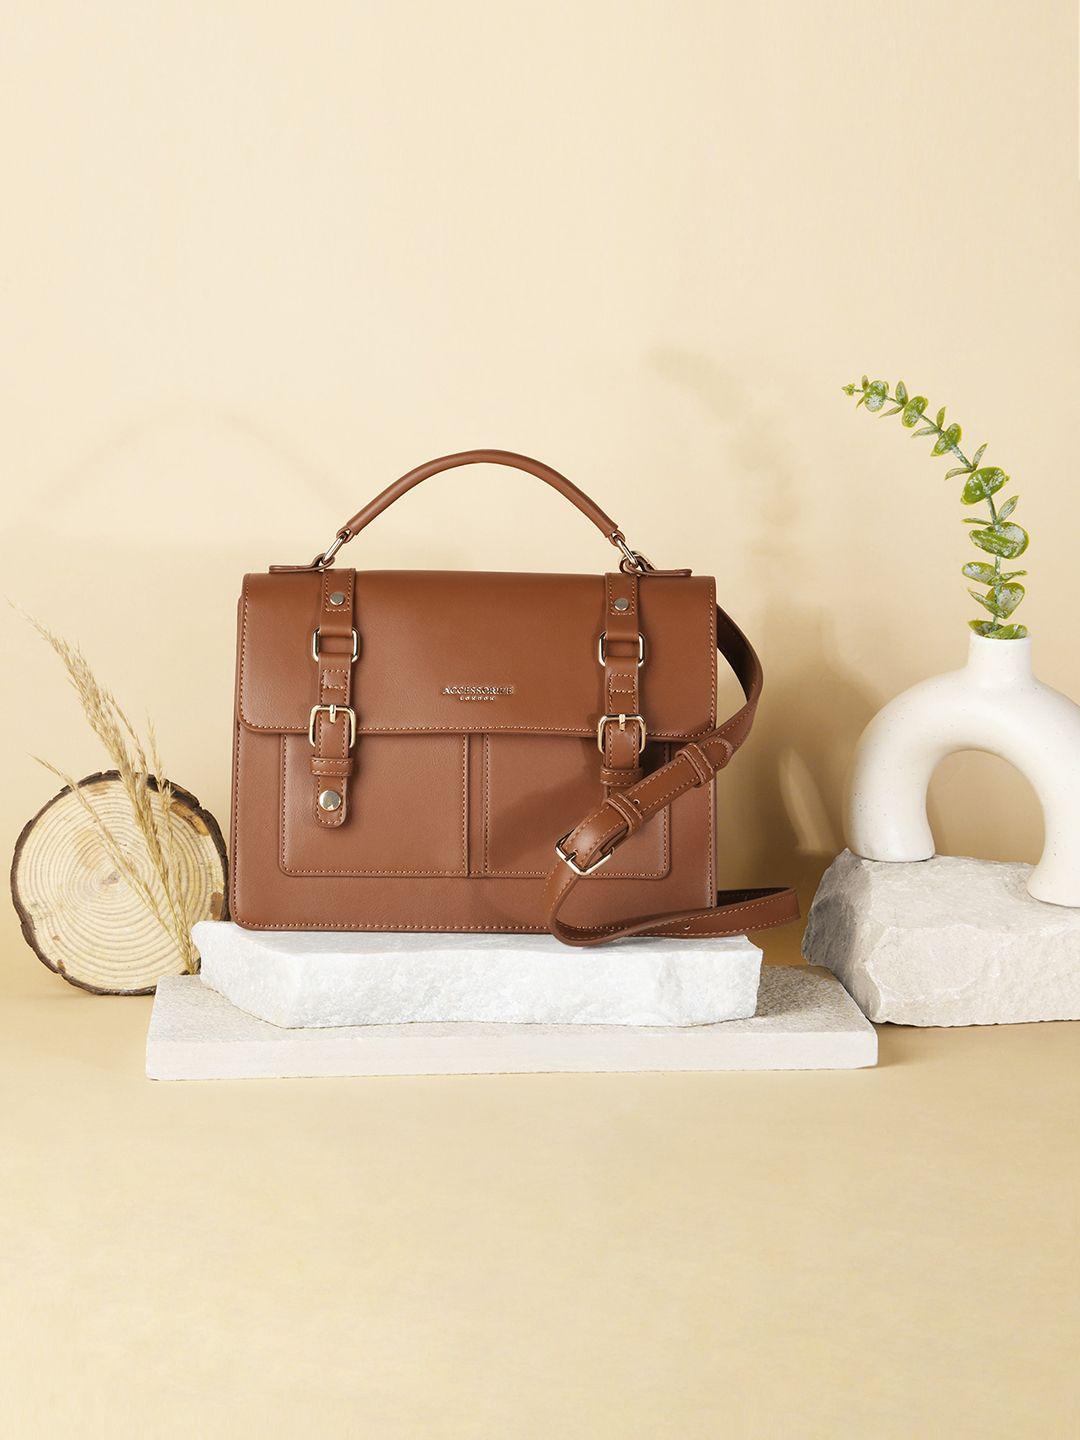 accessorize tan structured satchel